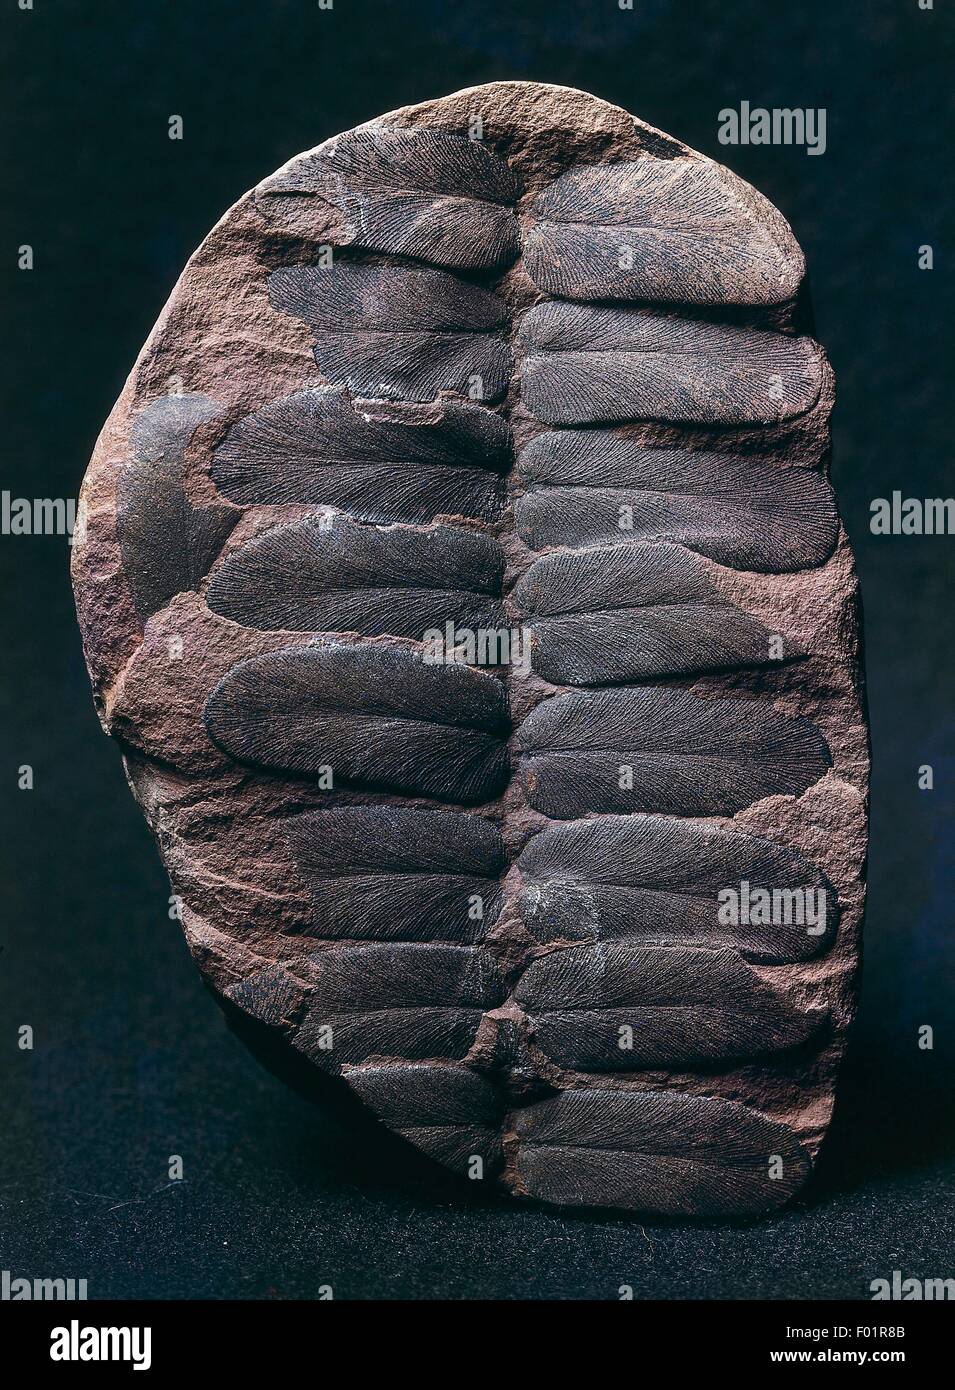 Neuropteris gigantea fossil, Pteridospermatophyta, Carboniferous Period. Stock Photo